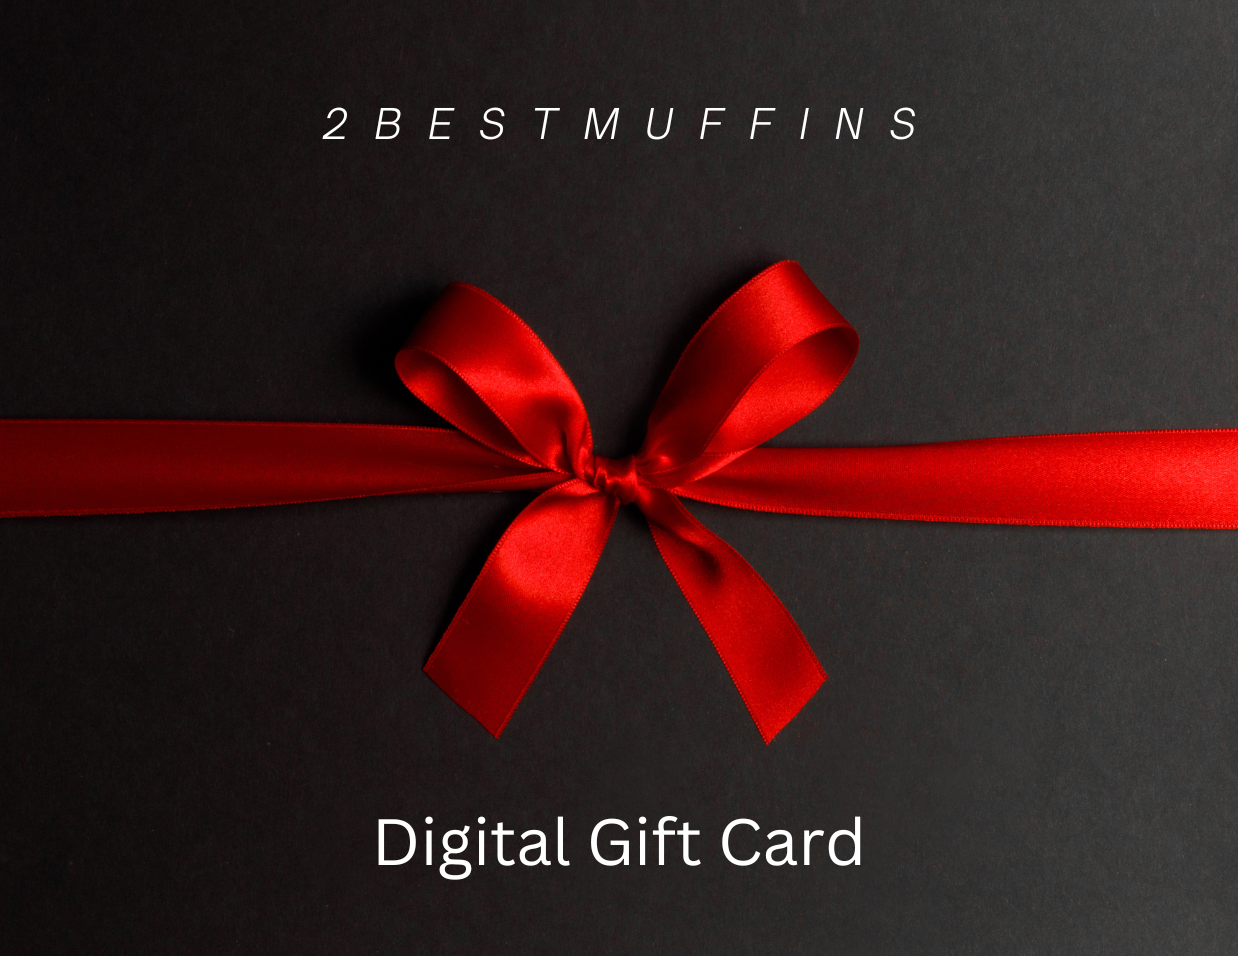 2bestmuffins Gift Card